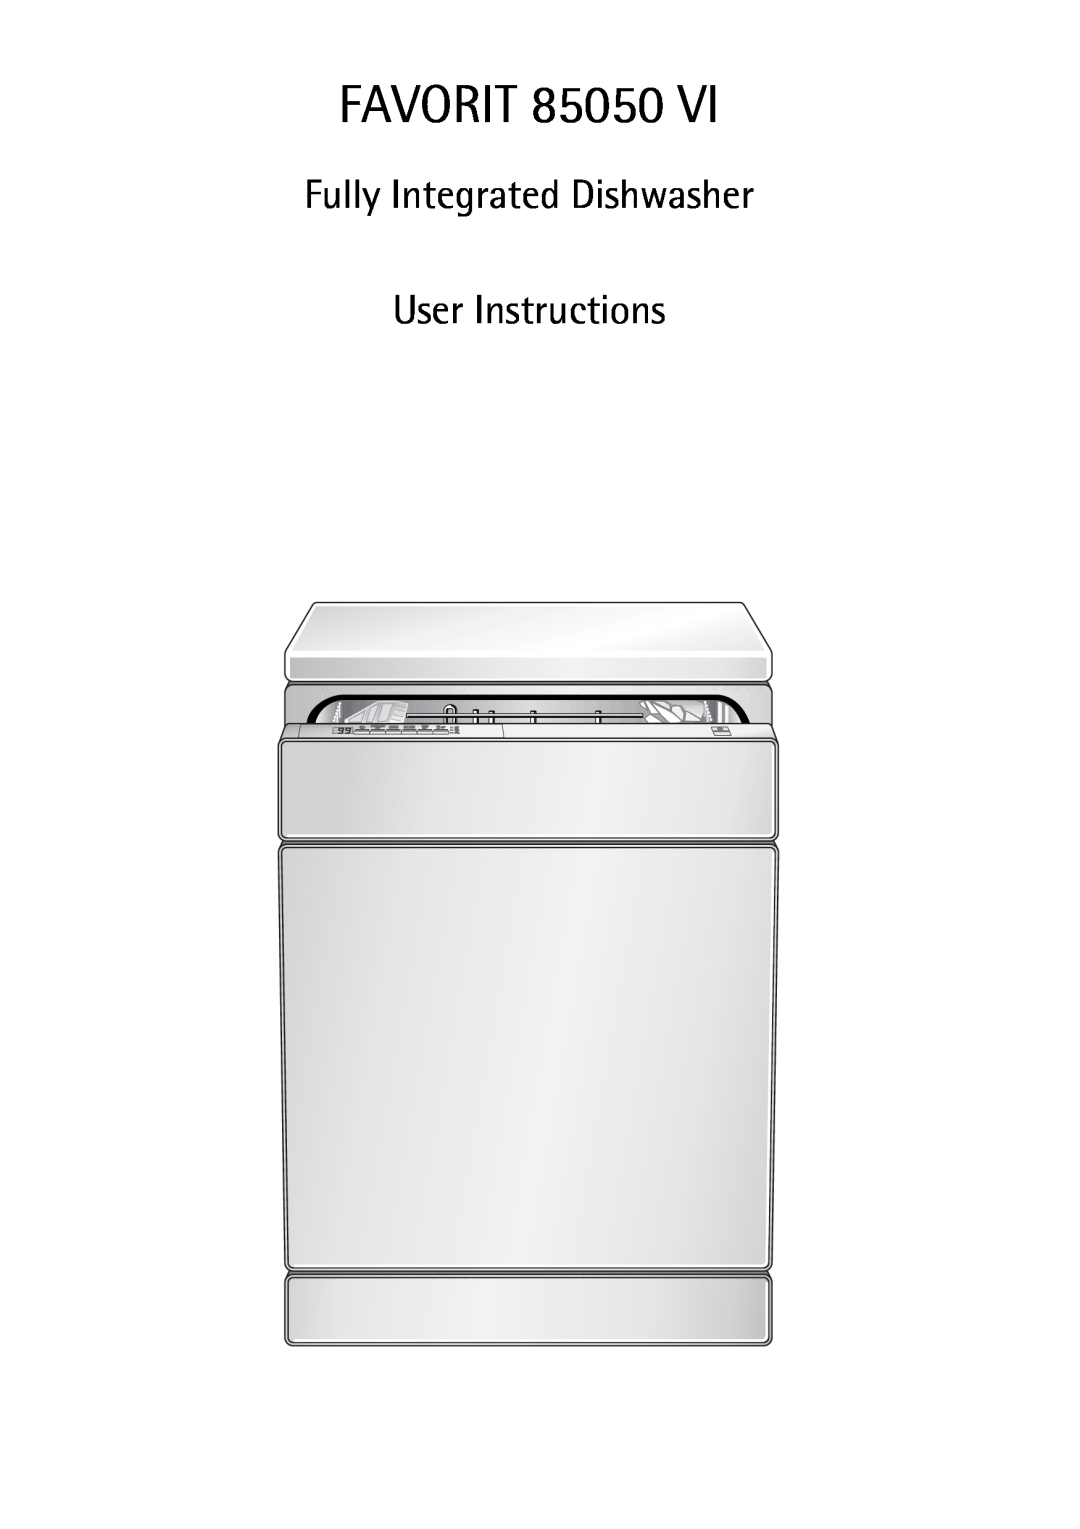 Electrolux 85050 VI manual FAVORIT 85050, Fully Integrated Dishwasher User Instructions 